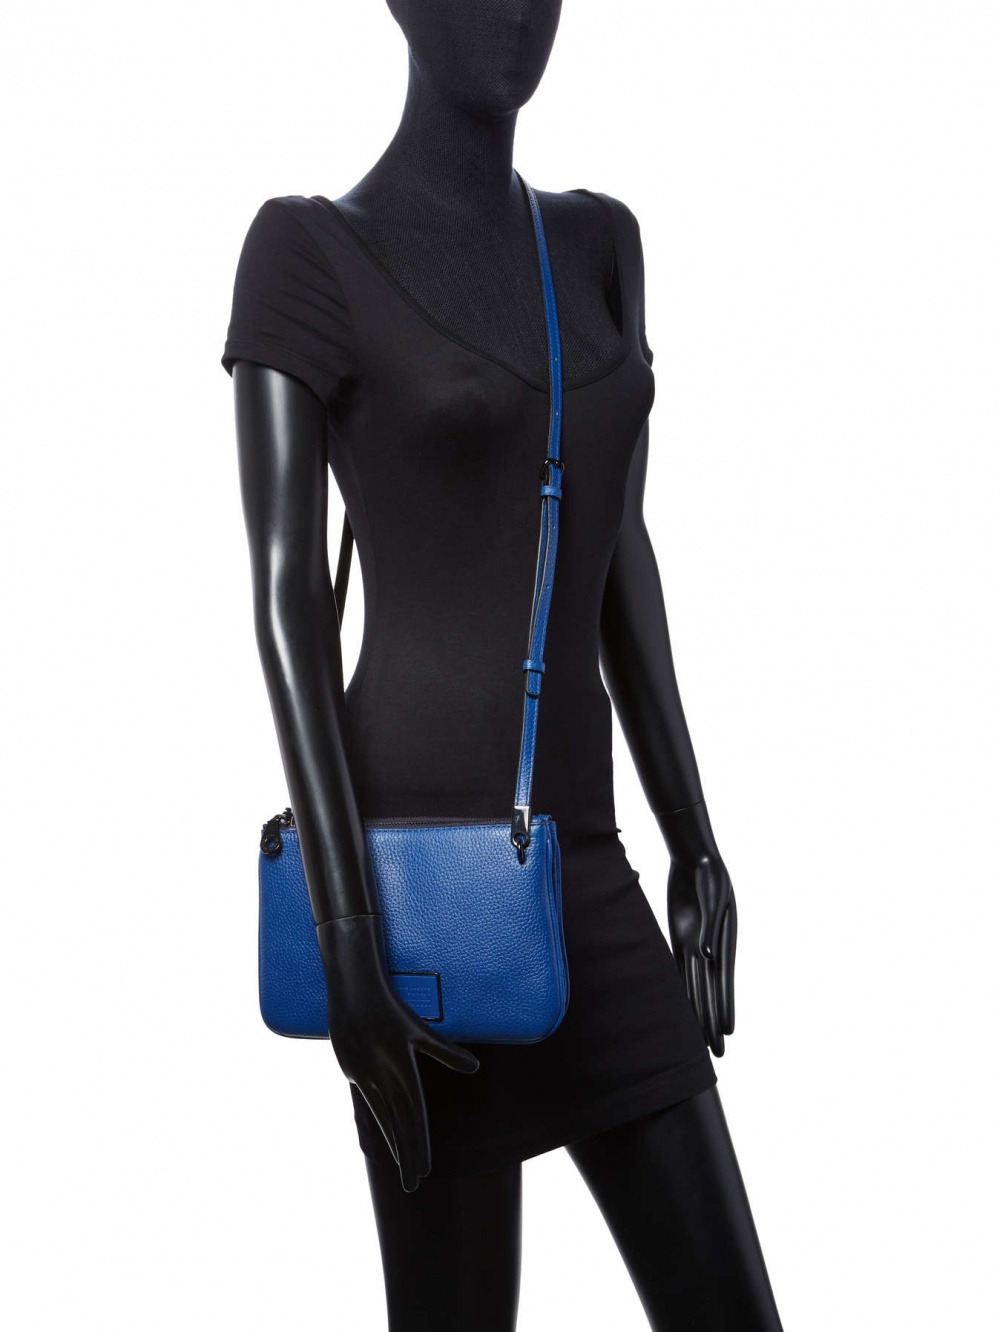 Сумка кроссбоди Marc by Marc Jacobs, модель Ligero Double Percy Leather Crossbody, синяя